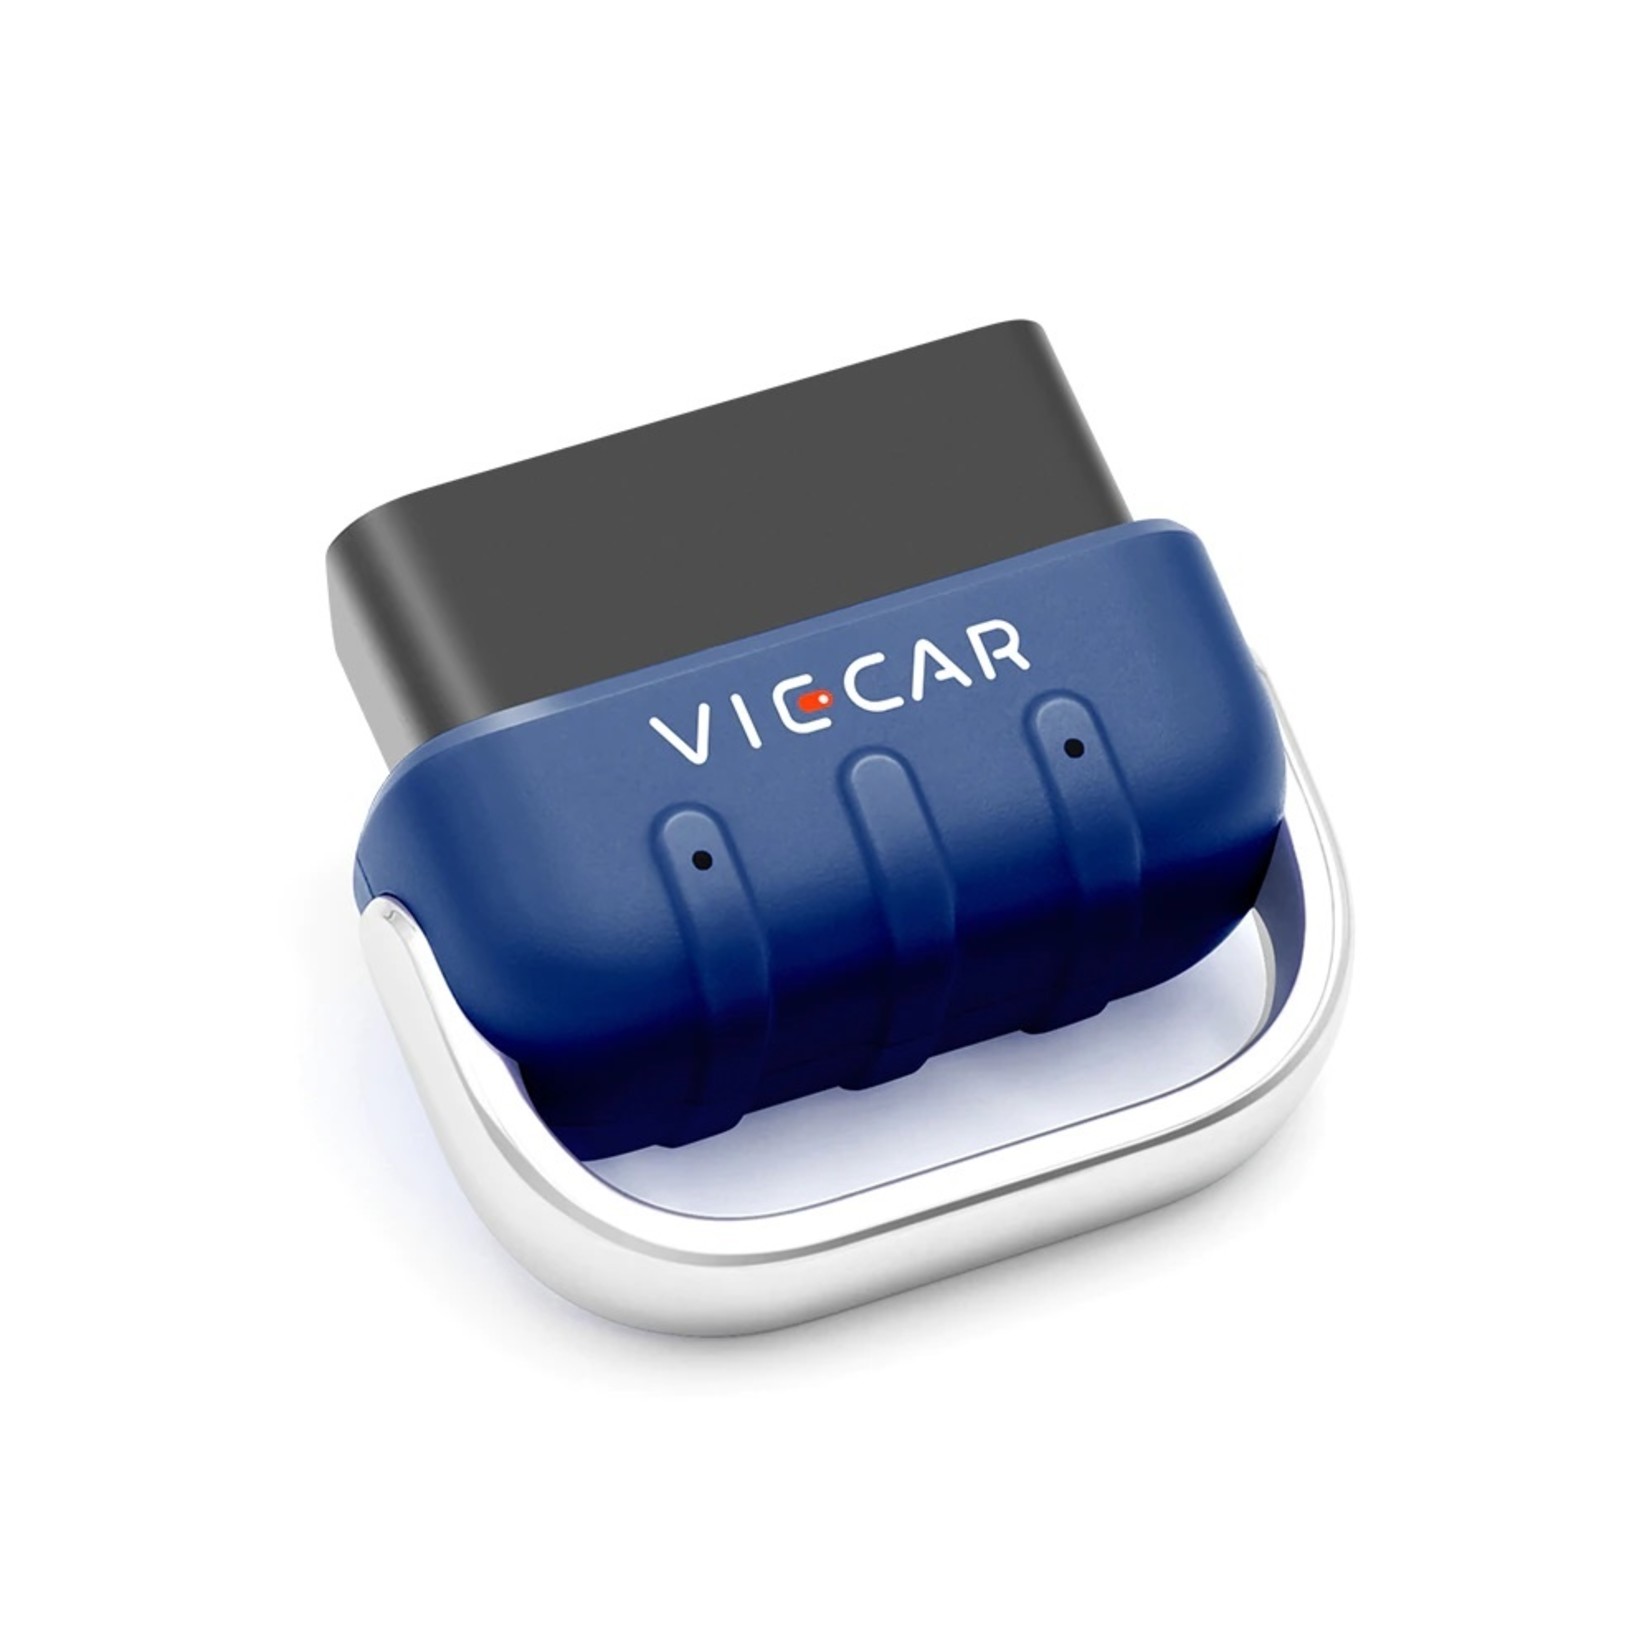 Viecar Viecar VP005 Bluetooth 5.0/VP006 WIFI OBD2 Scanner Tool Nieuwe BLE OBDII Code Reader Super Mini Auto Diagnostische Scanning Tool Voor Android/iOS